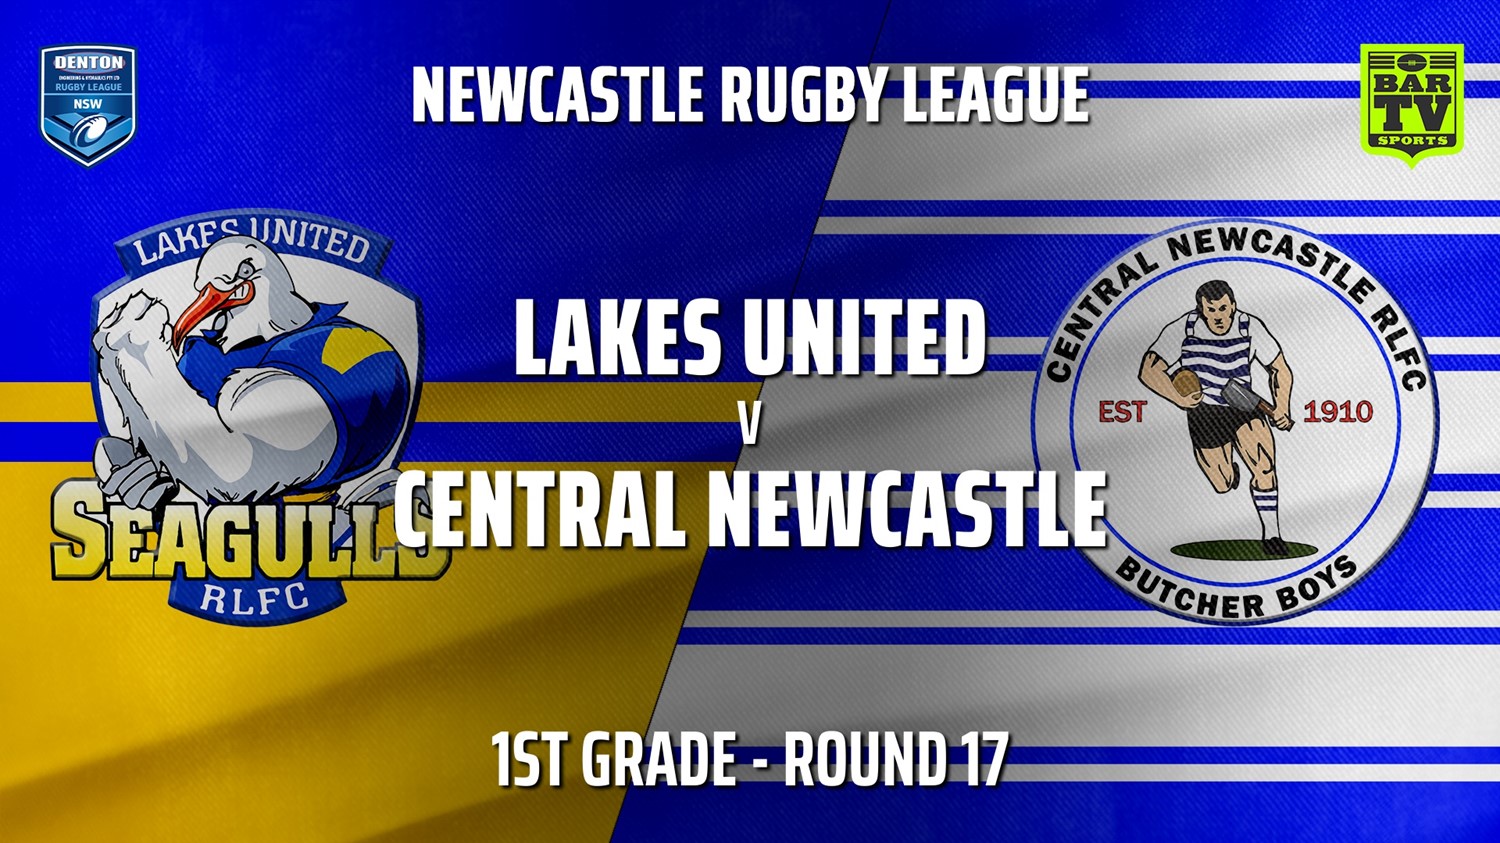 210731-Newcastle Round 17 - 1st Grade - Lakes United v Central Newcastle Slate Image